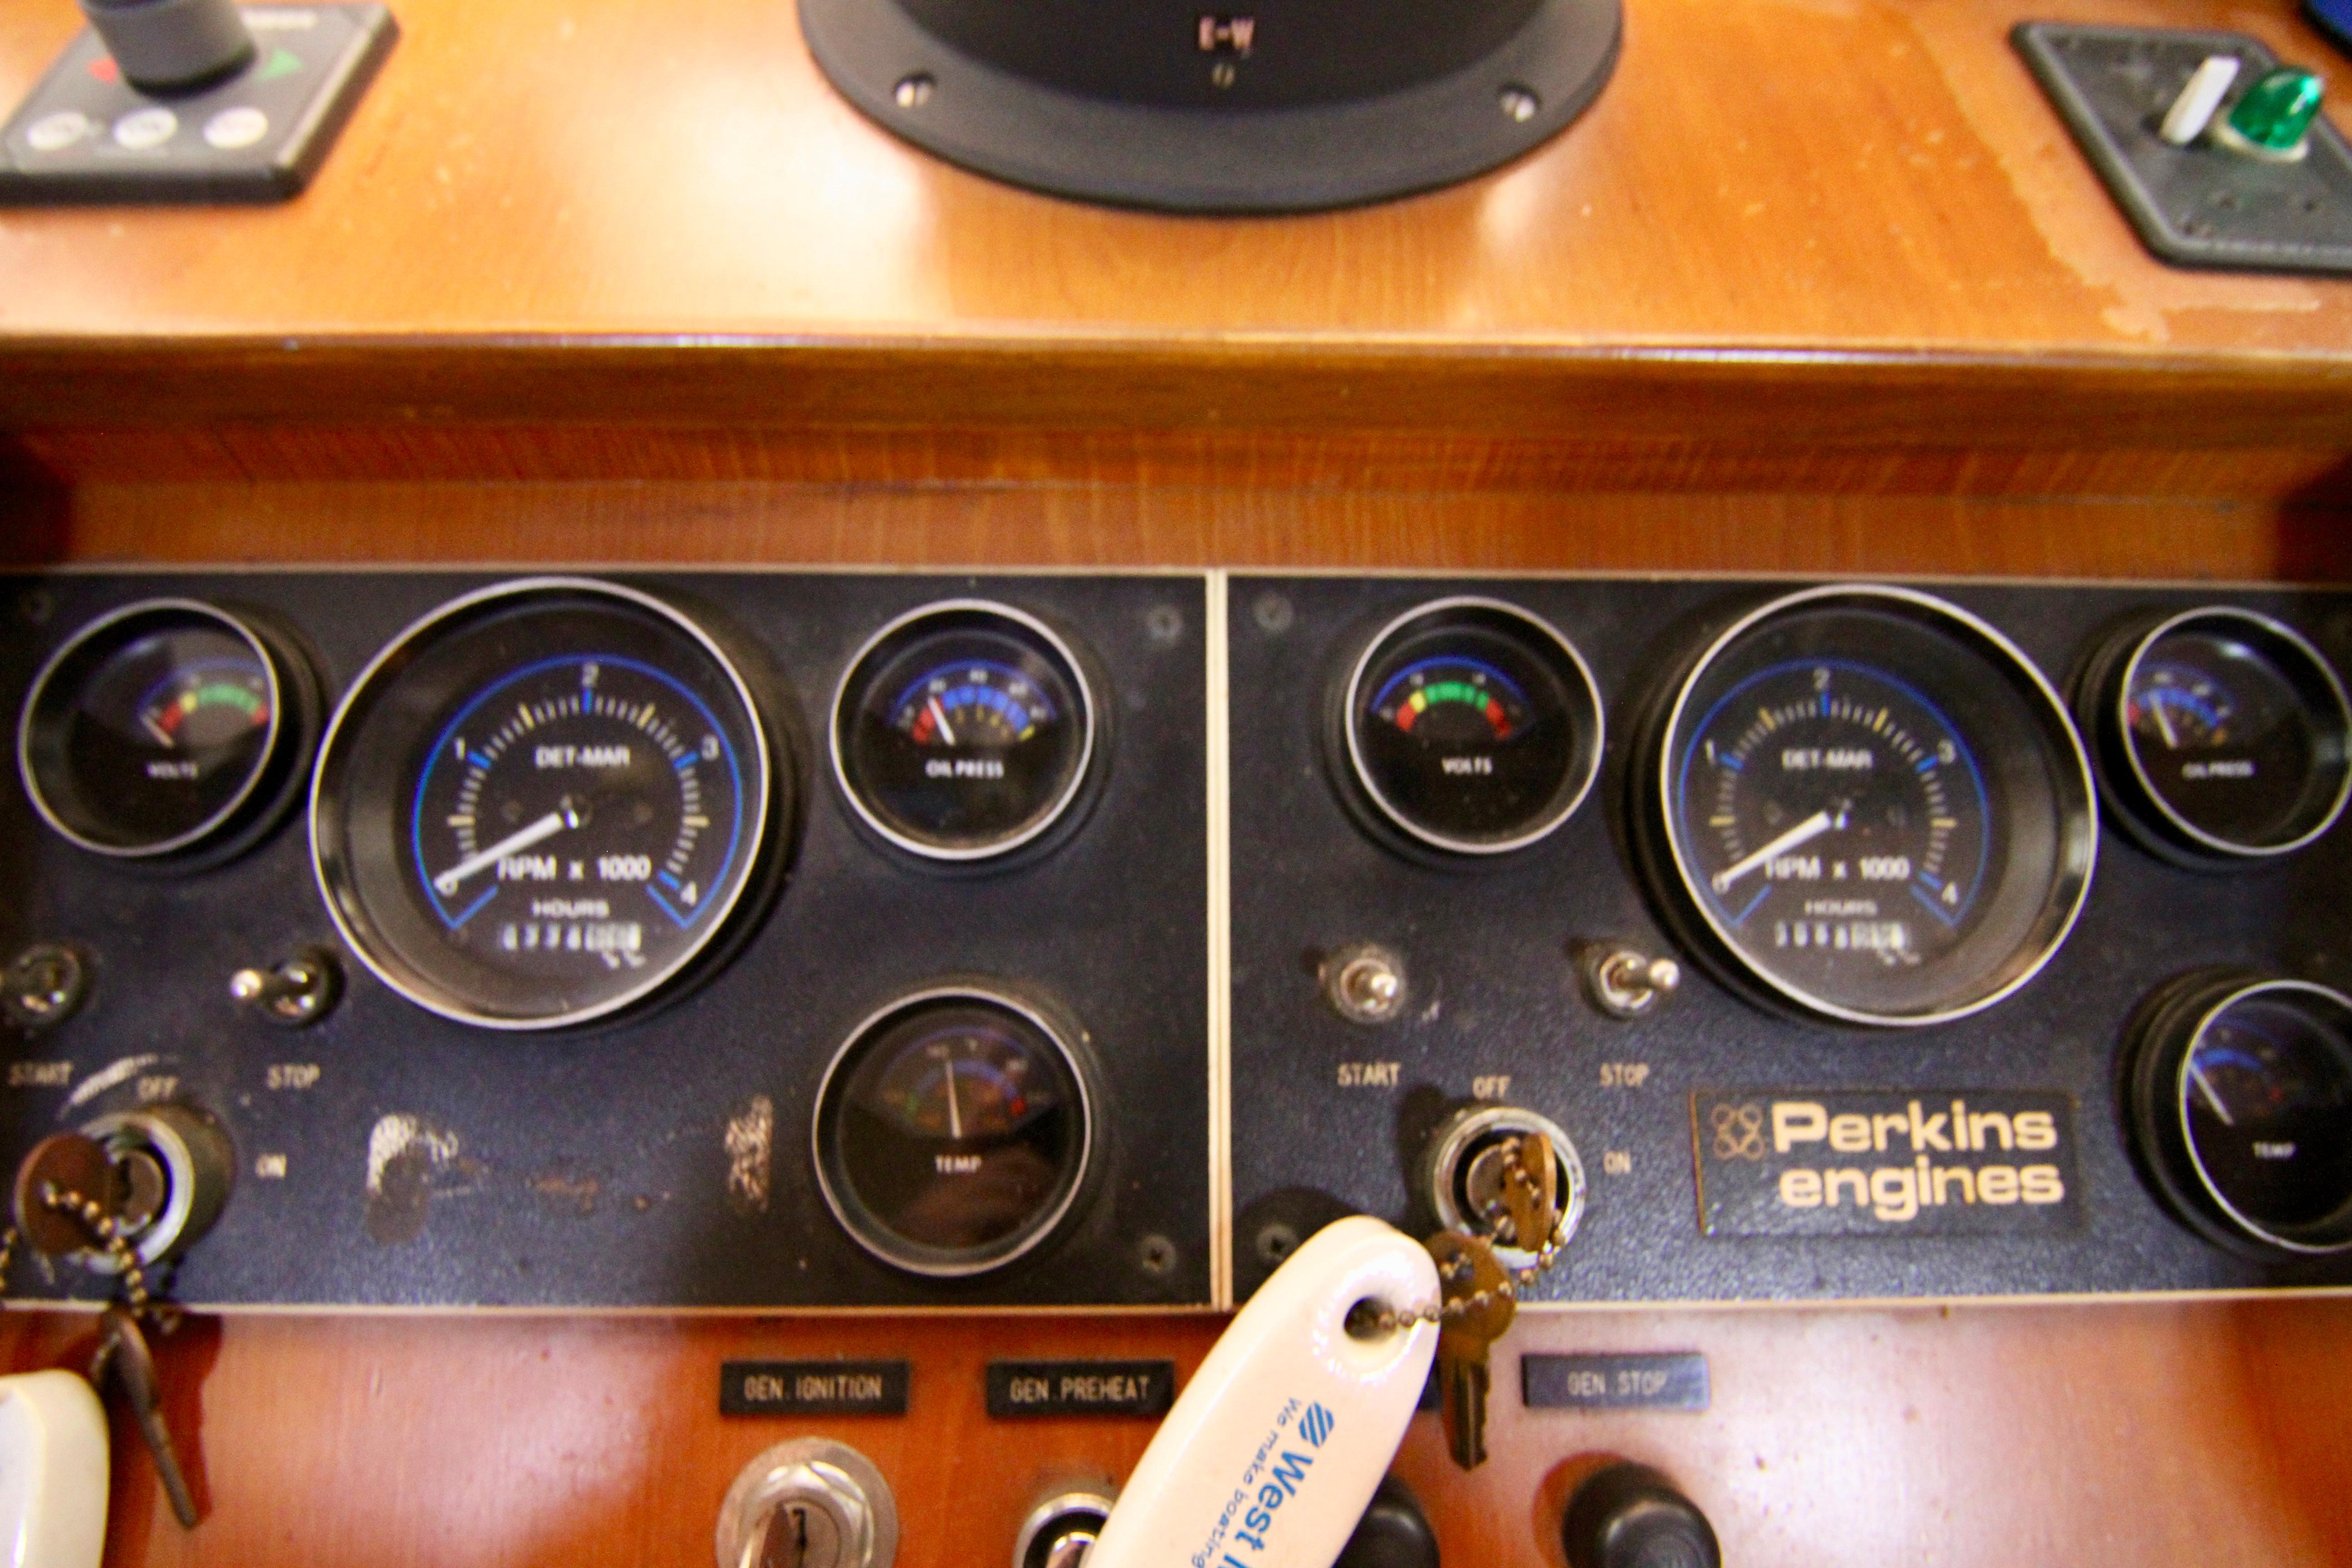 1983 Lien Hwa 58 Pilothouse Cockpit Motoryacht